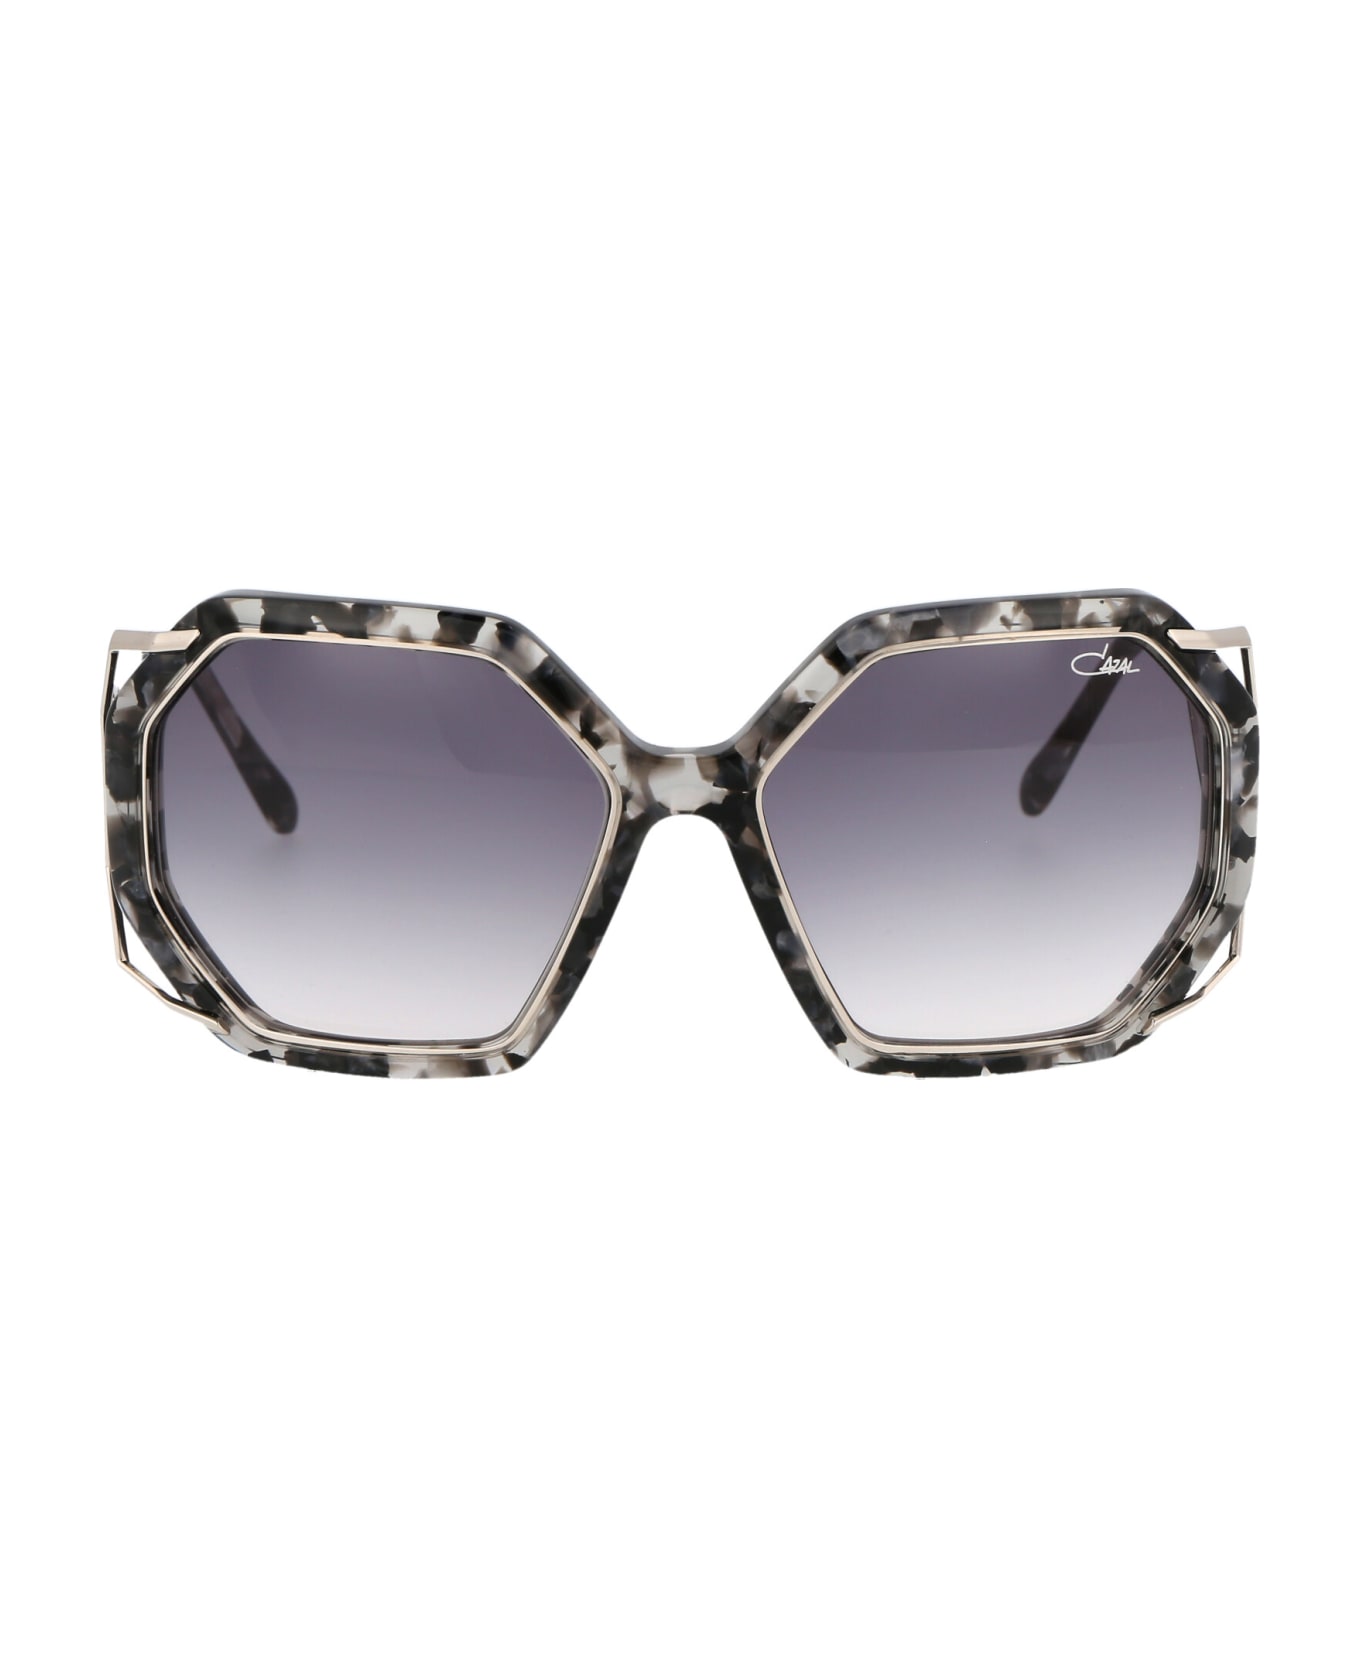 Cazal Mod. 8505 Sunglasses Light - 001 GREY SILVER